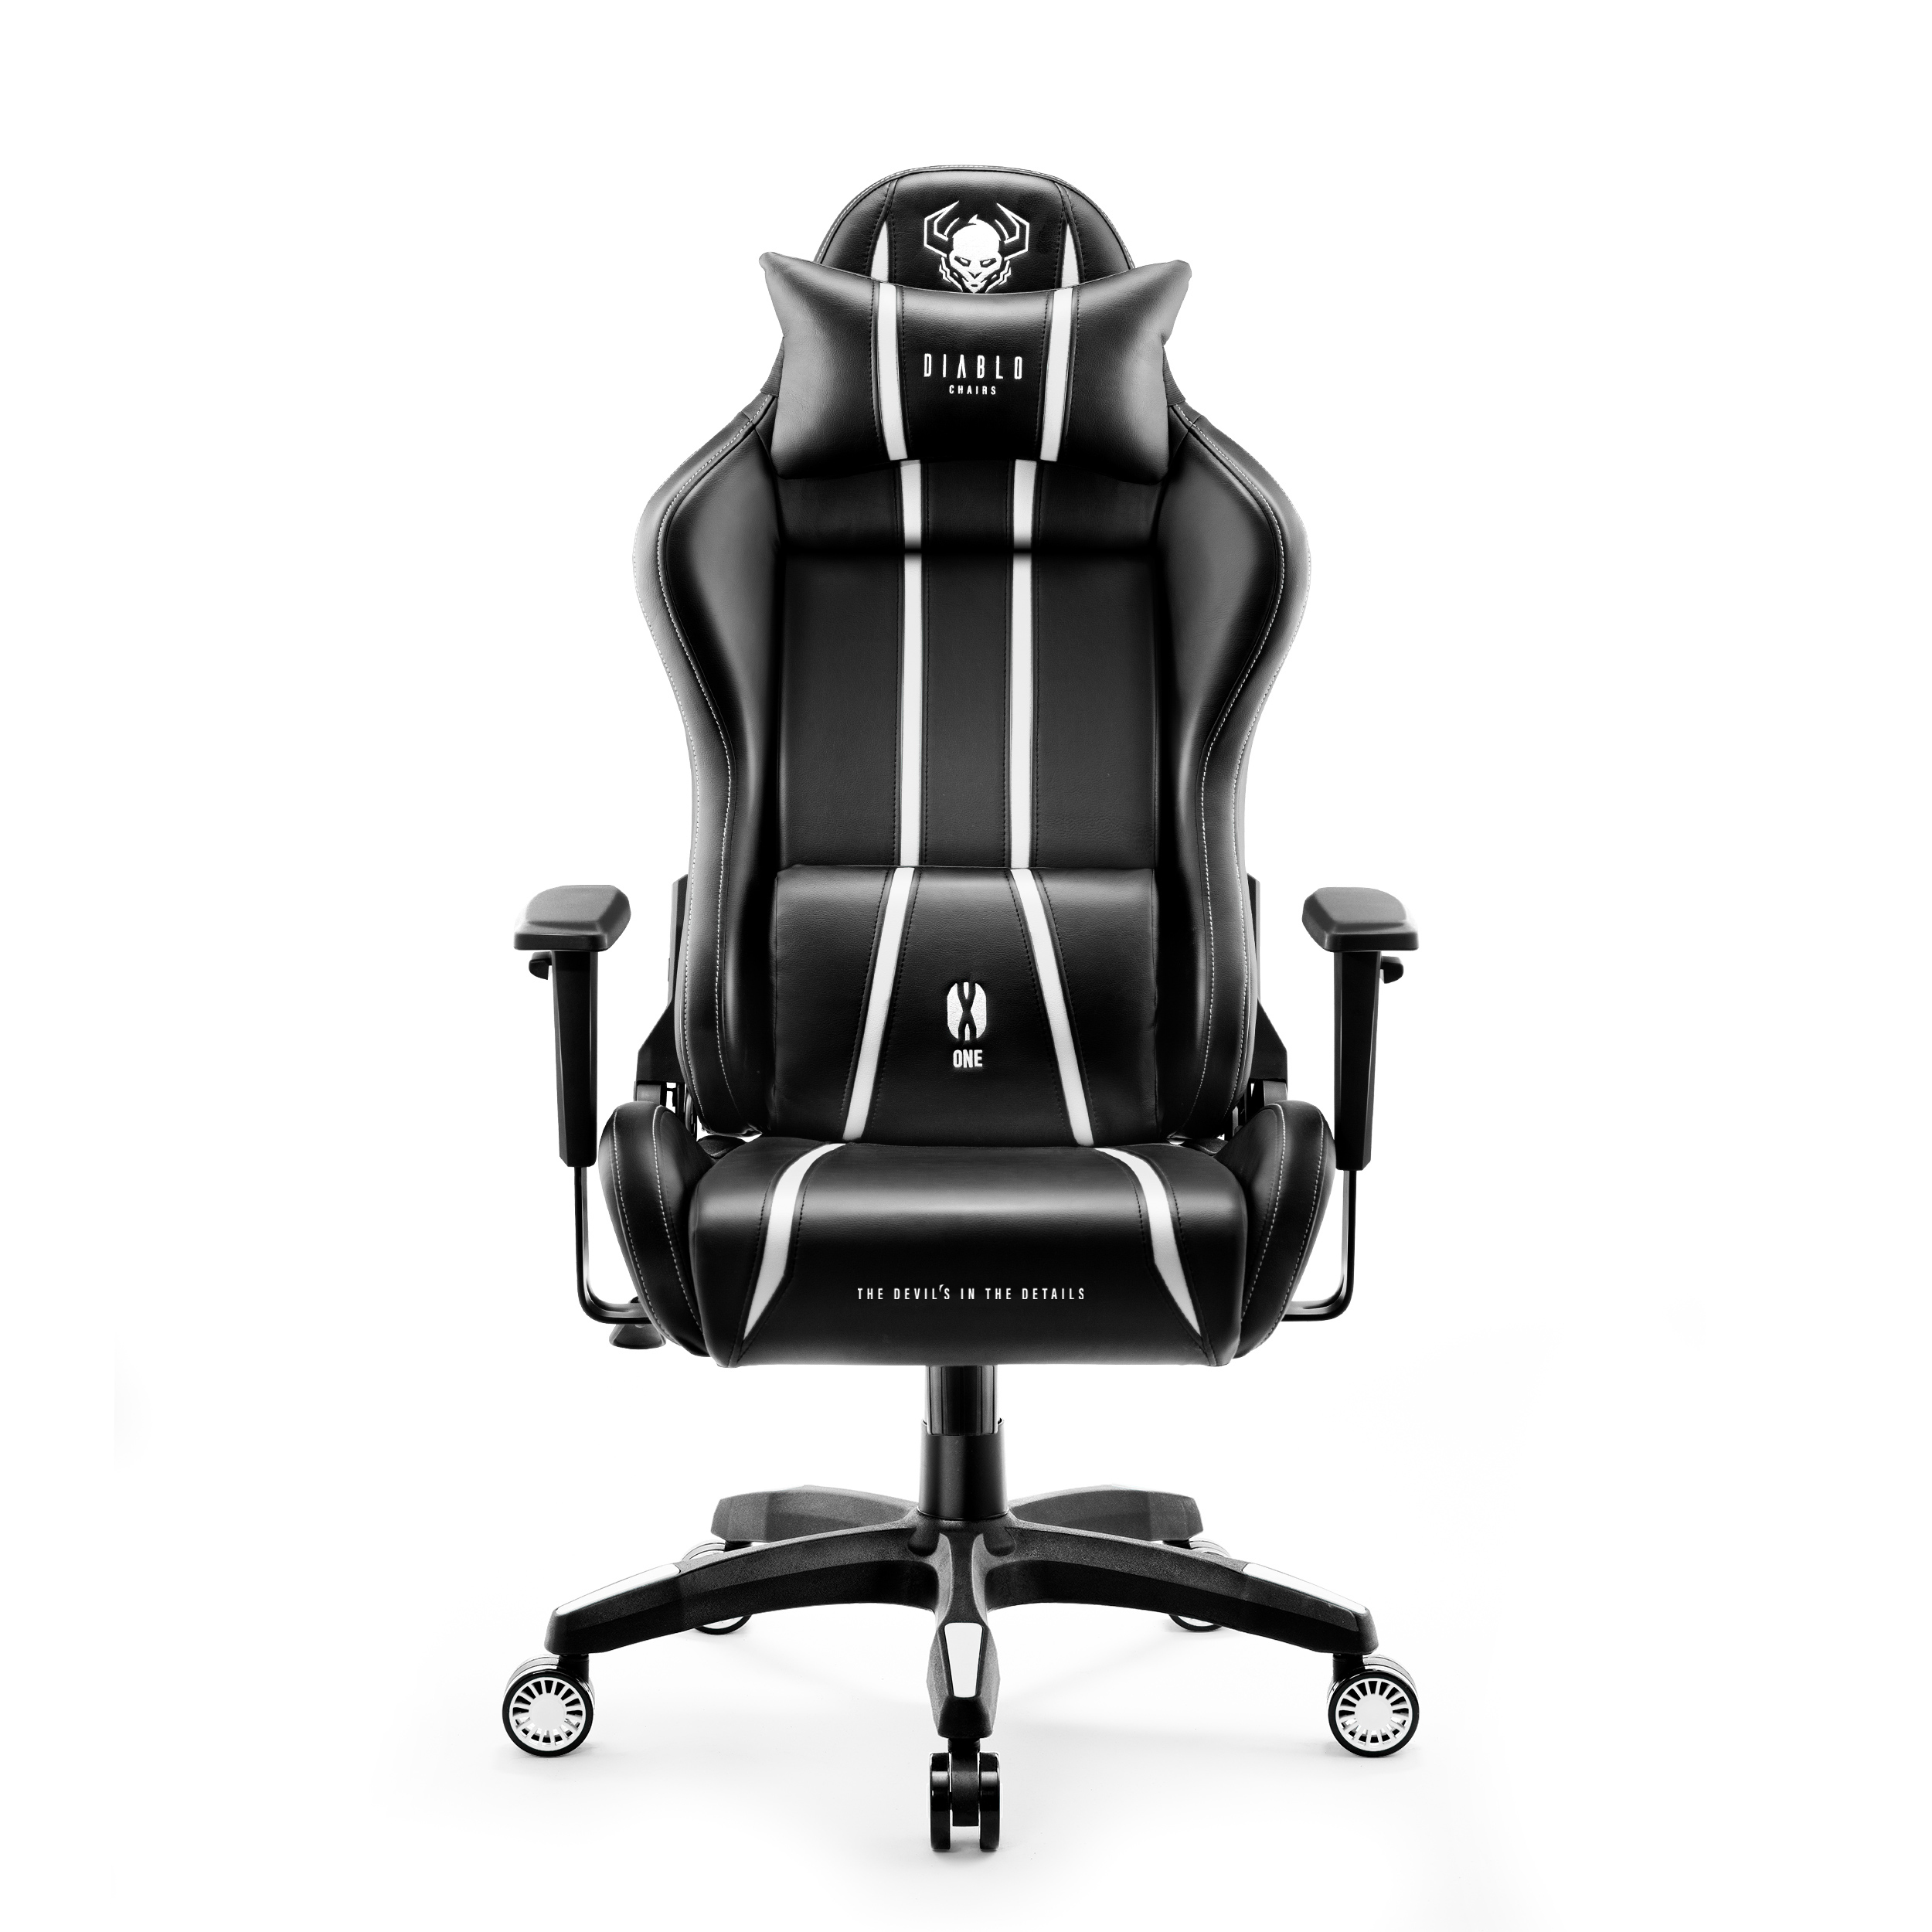 DIABLO CHAIRS GAMING STUHL X-ONE NORMAL 2.0 black/white Chair, Gaming